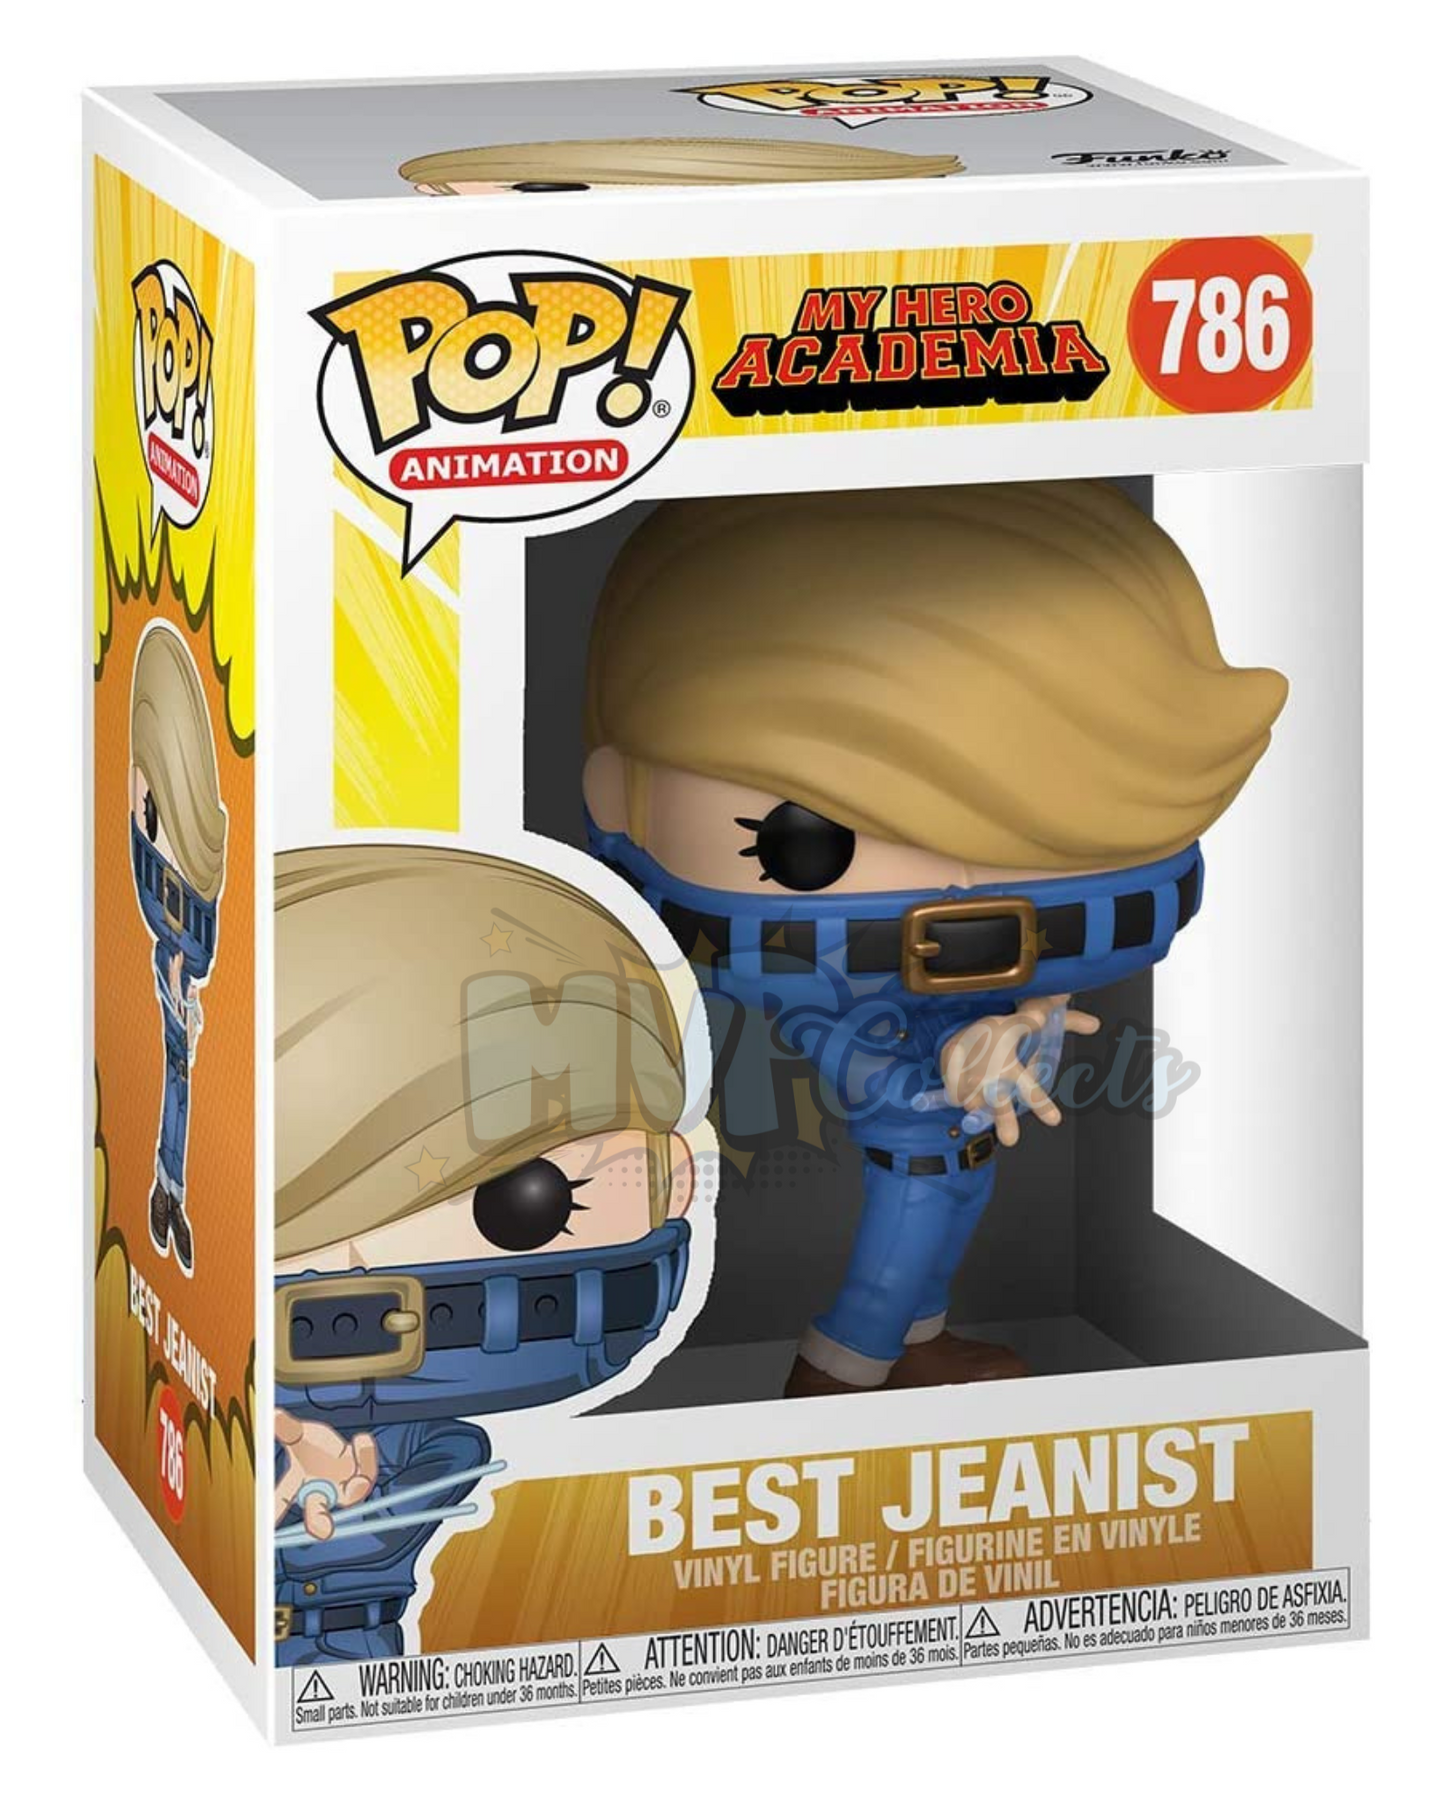 Best Jeanist POP! (My Hero Academia) 786